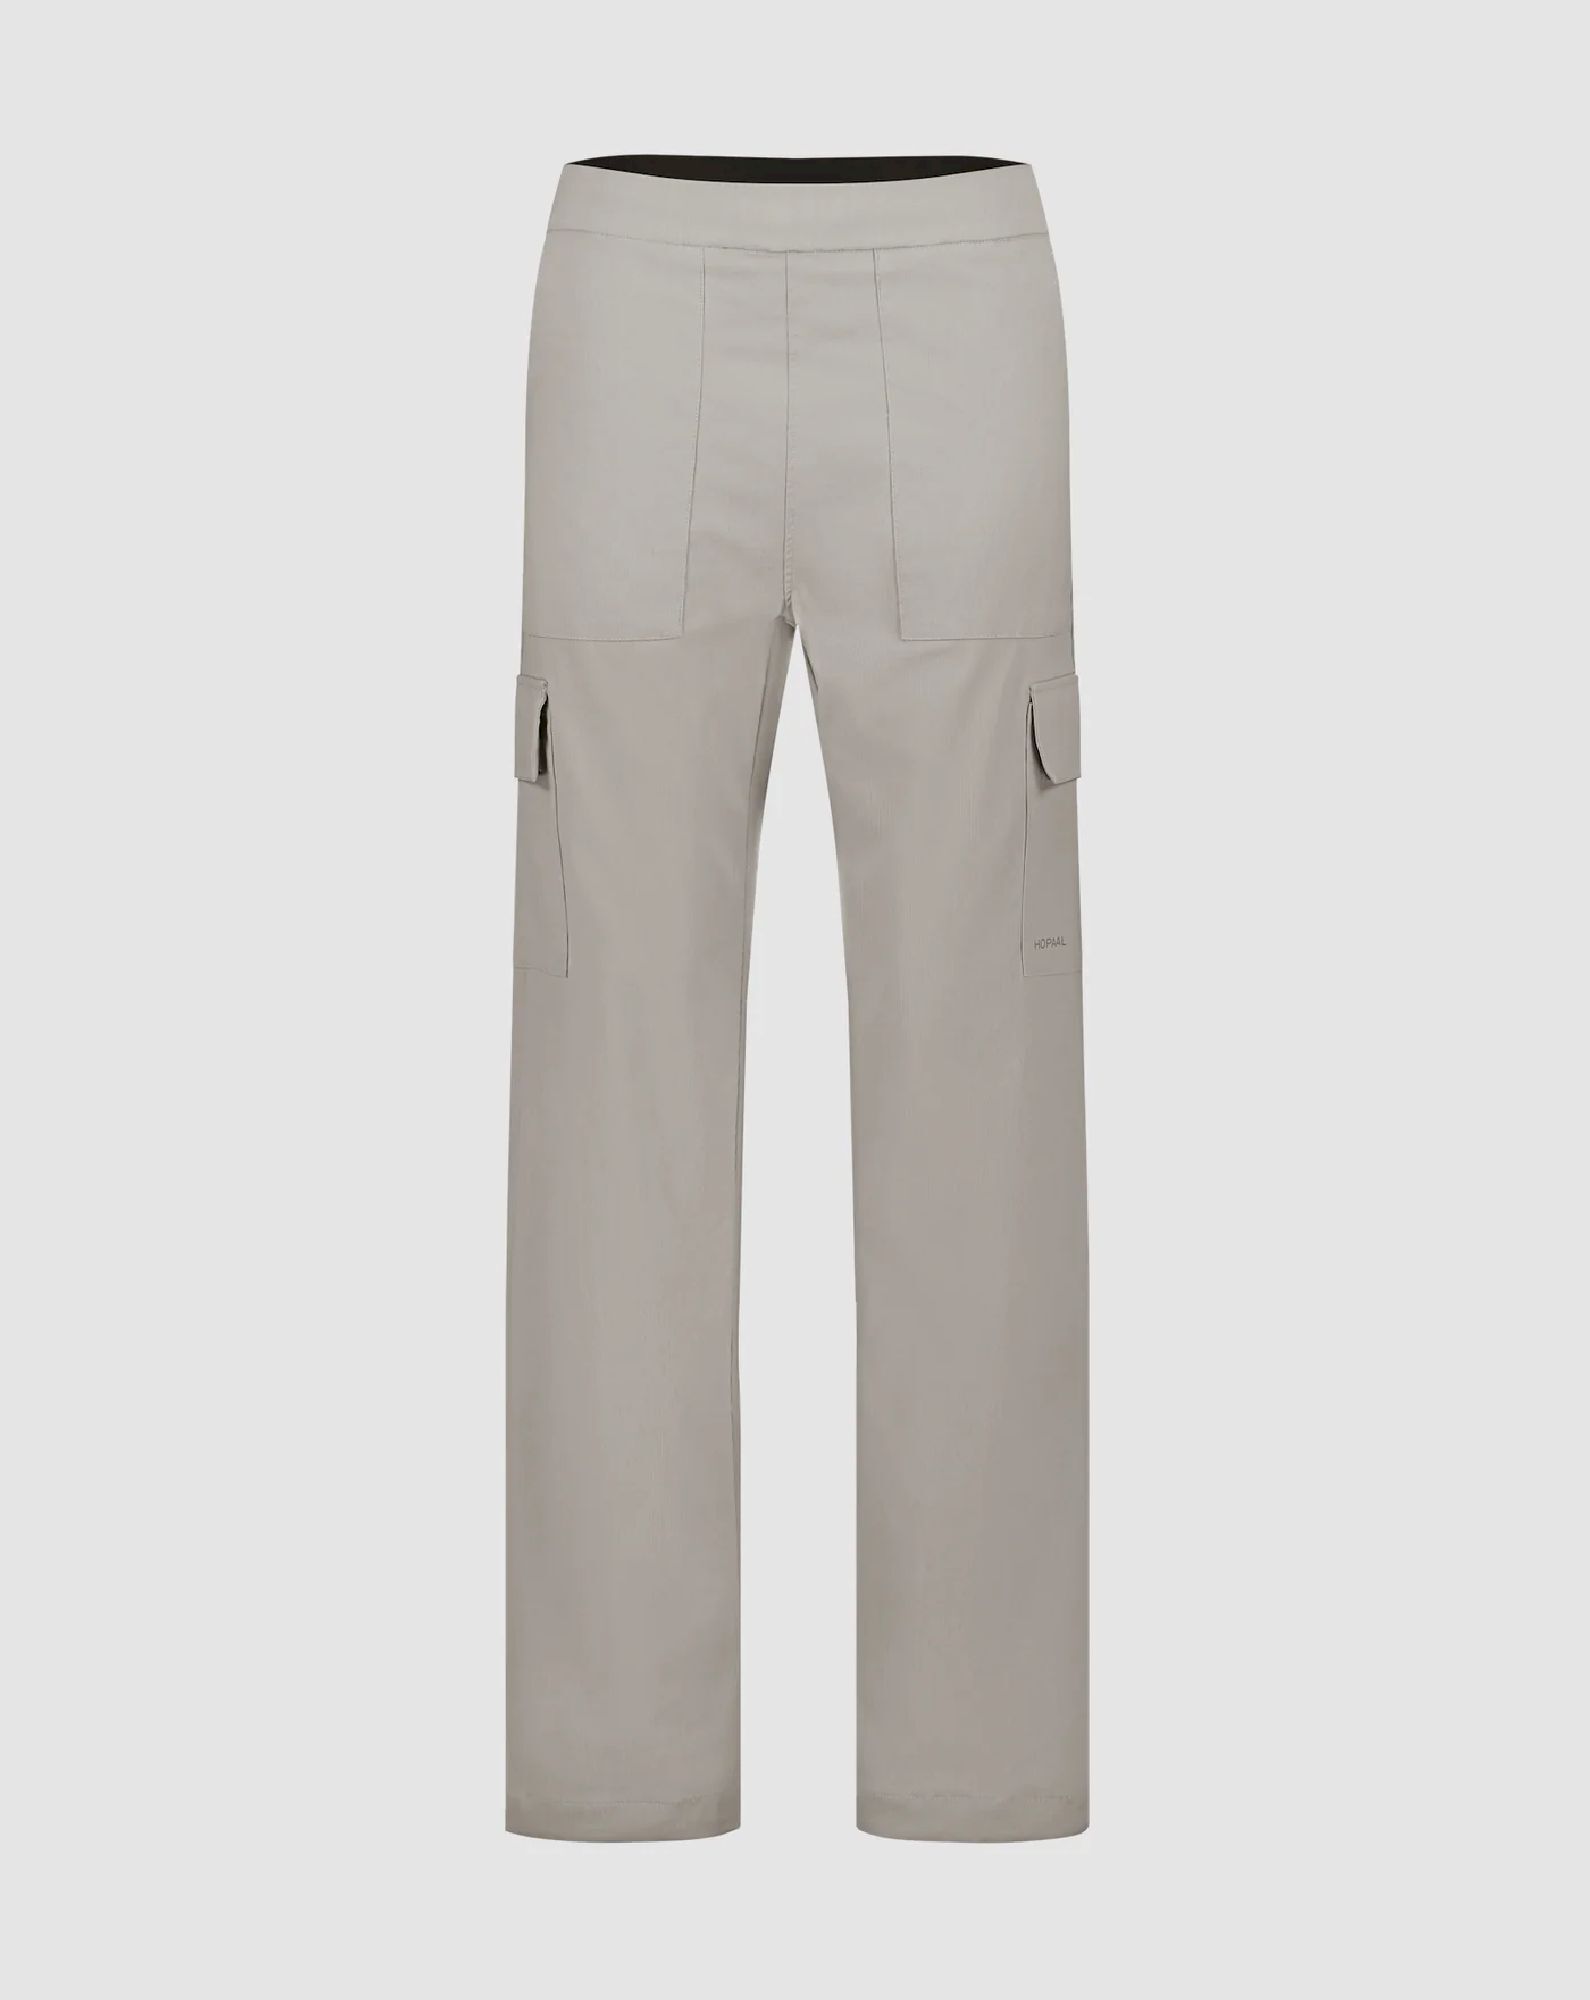 Hopaal Pantalon Multi-Activités - Walking trousers - Women's | Hardloop